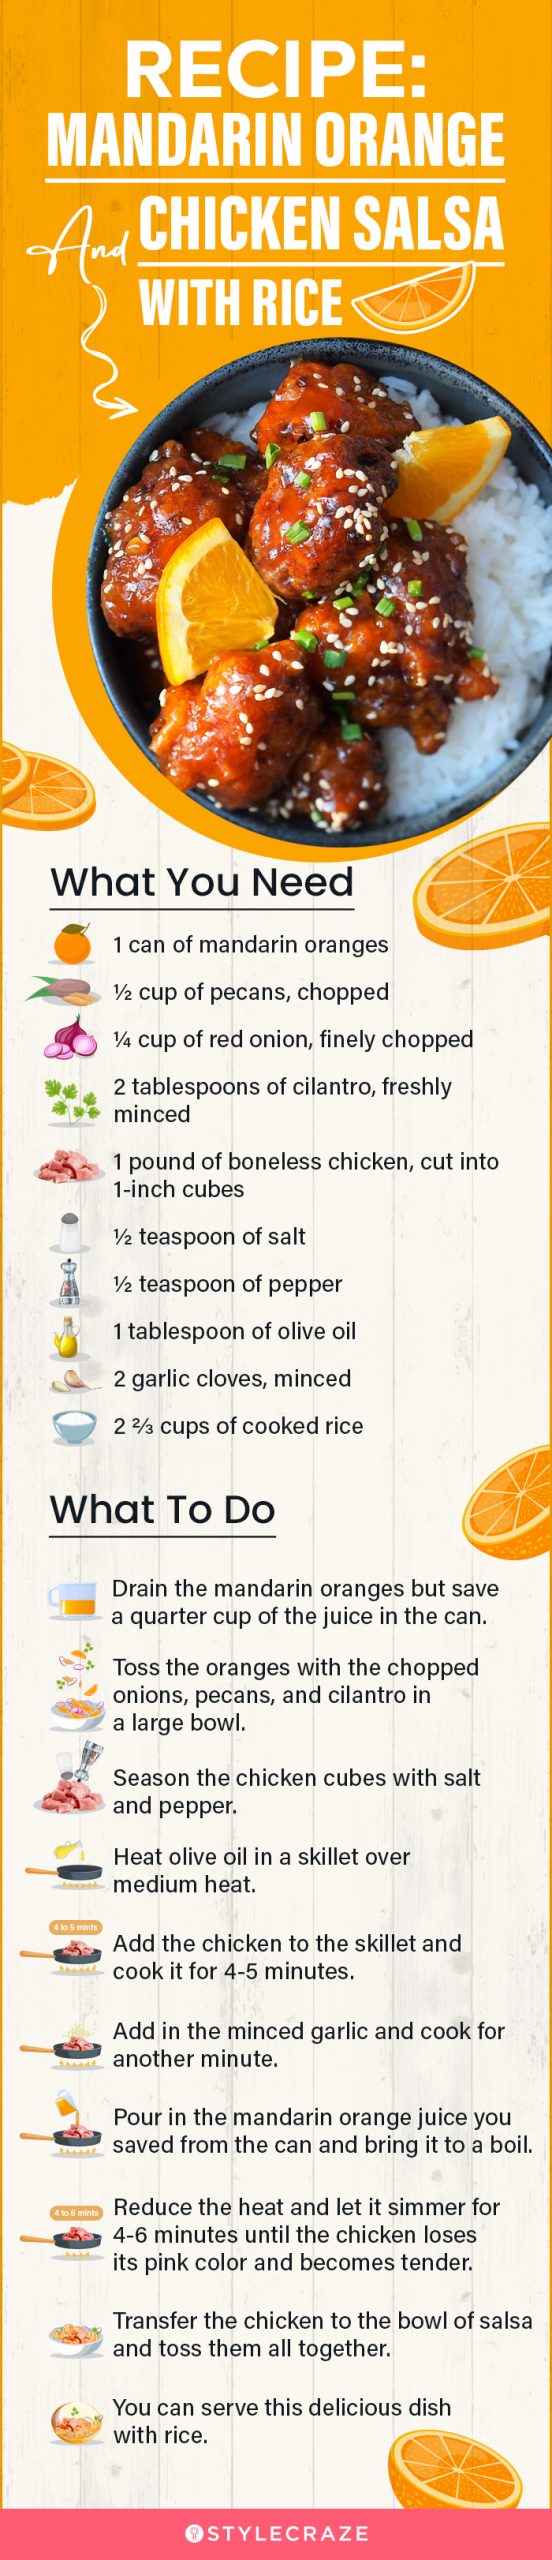 mandarin orange and chicken salsa with rice [infographic]